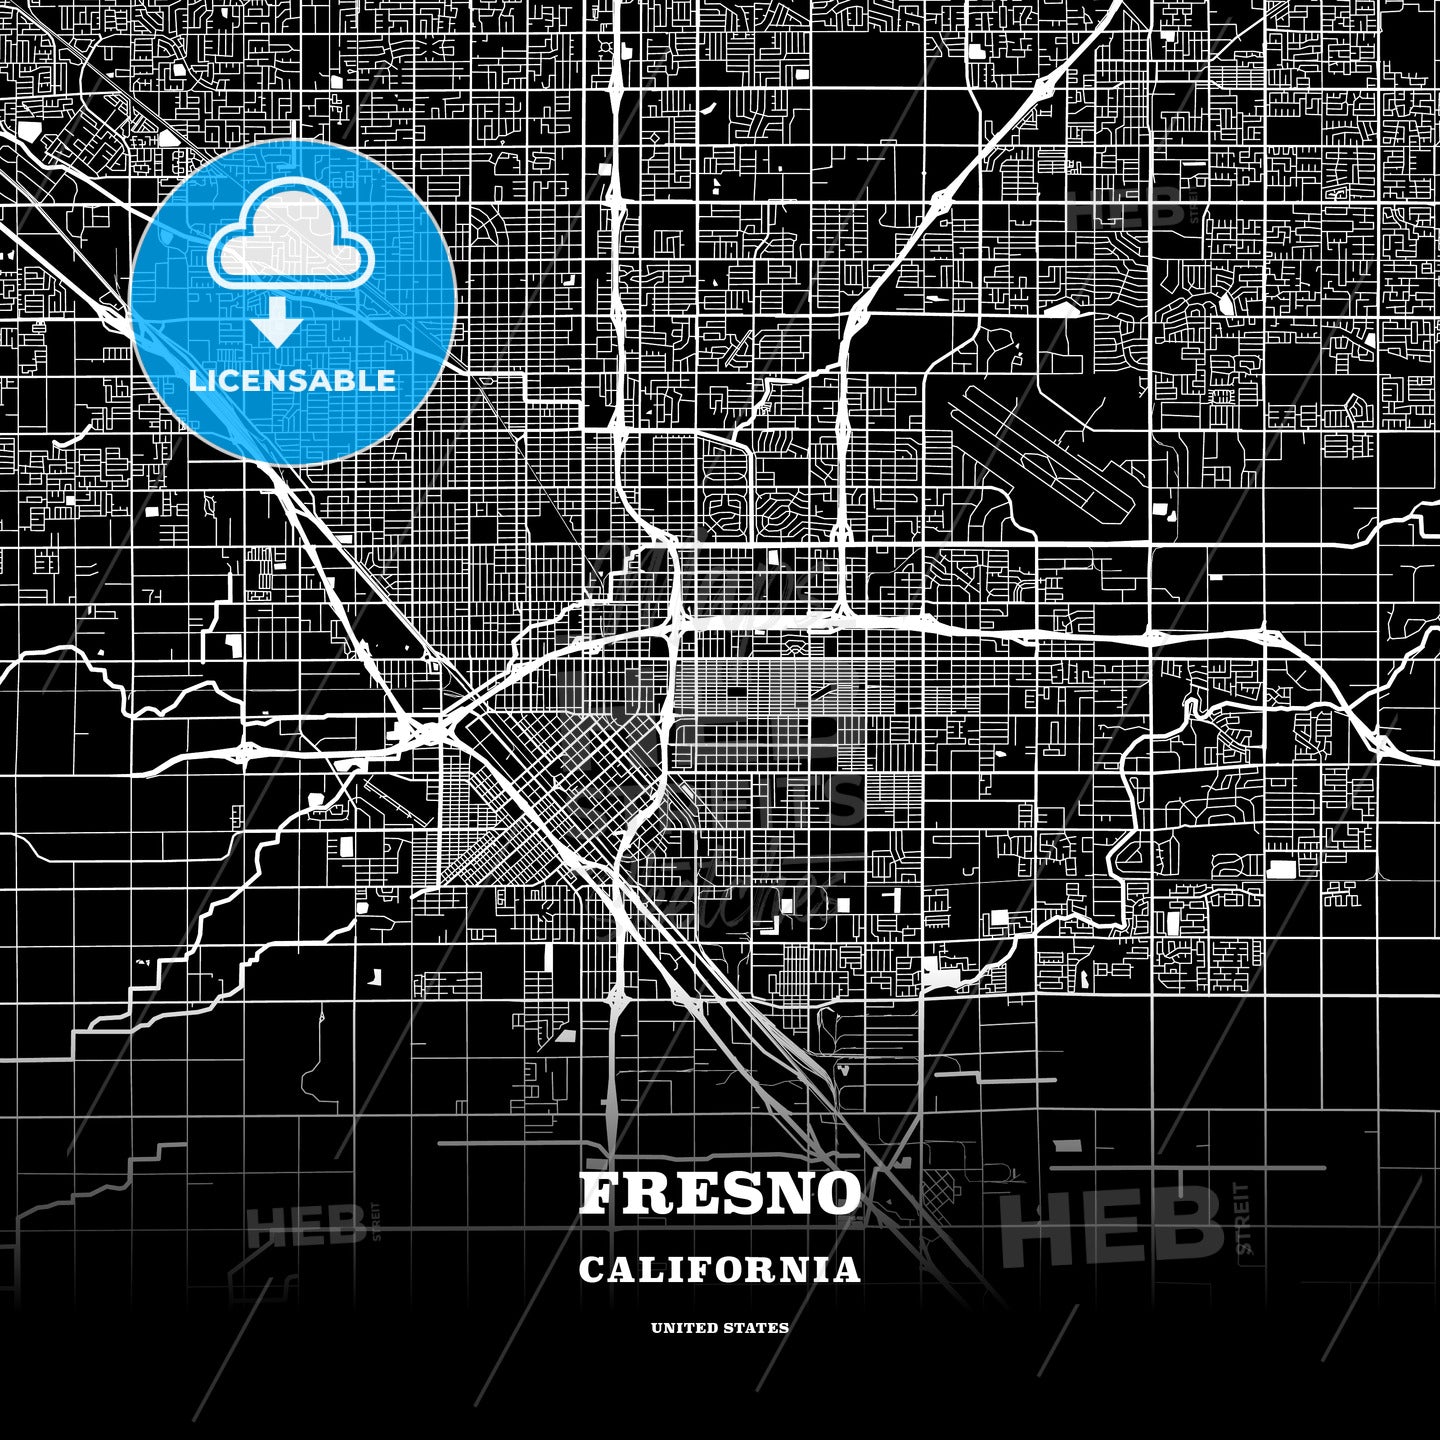 Fresno, California, USA map